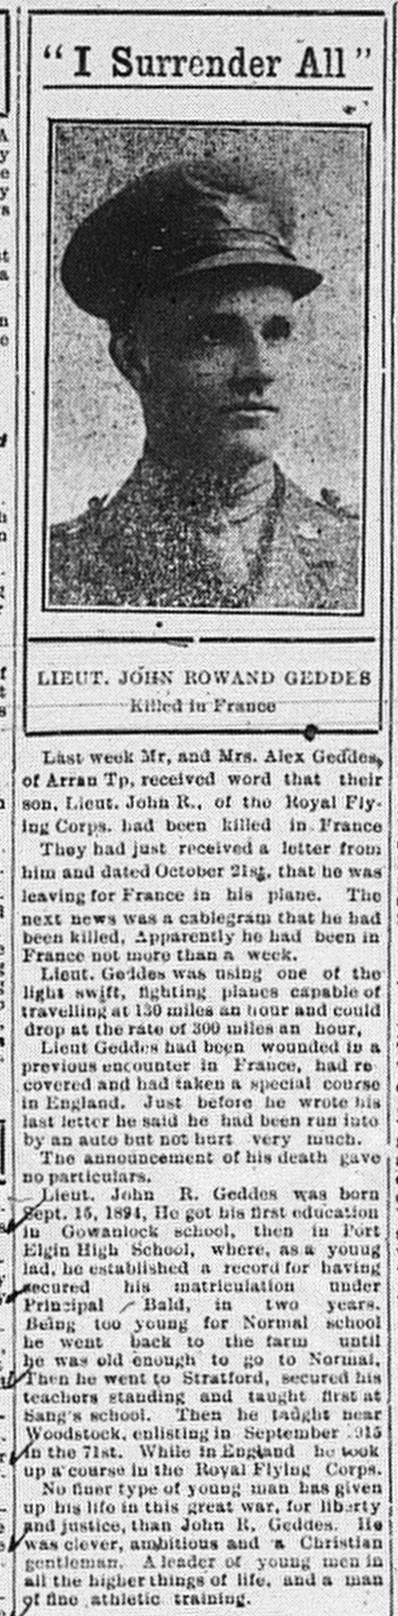 Port Elgin Times, November 14, 1917, p.1